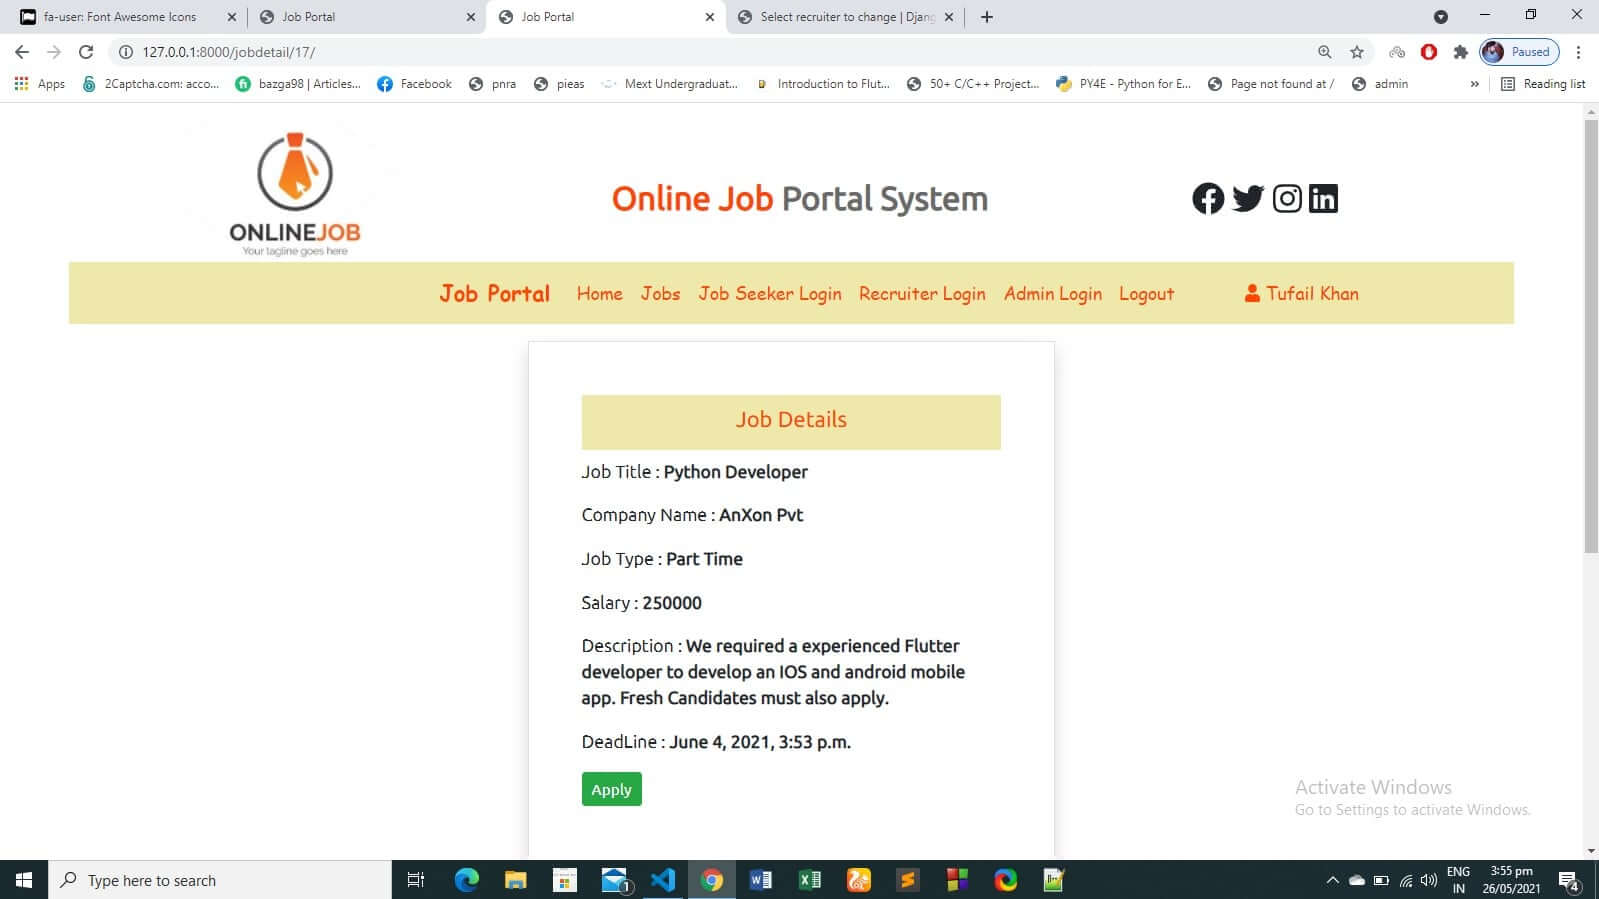 Online Job Portal System using Django Web Framework - Job Details